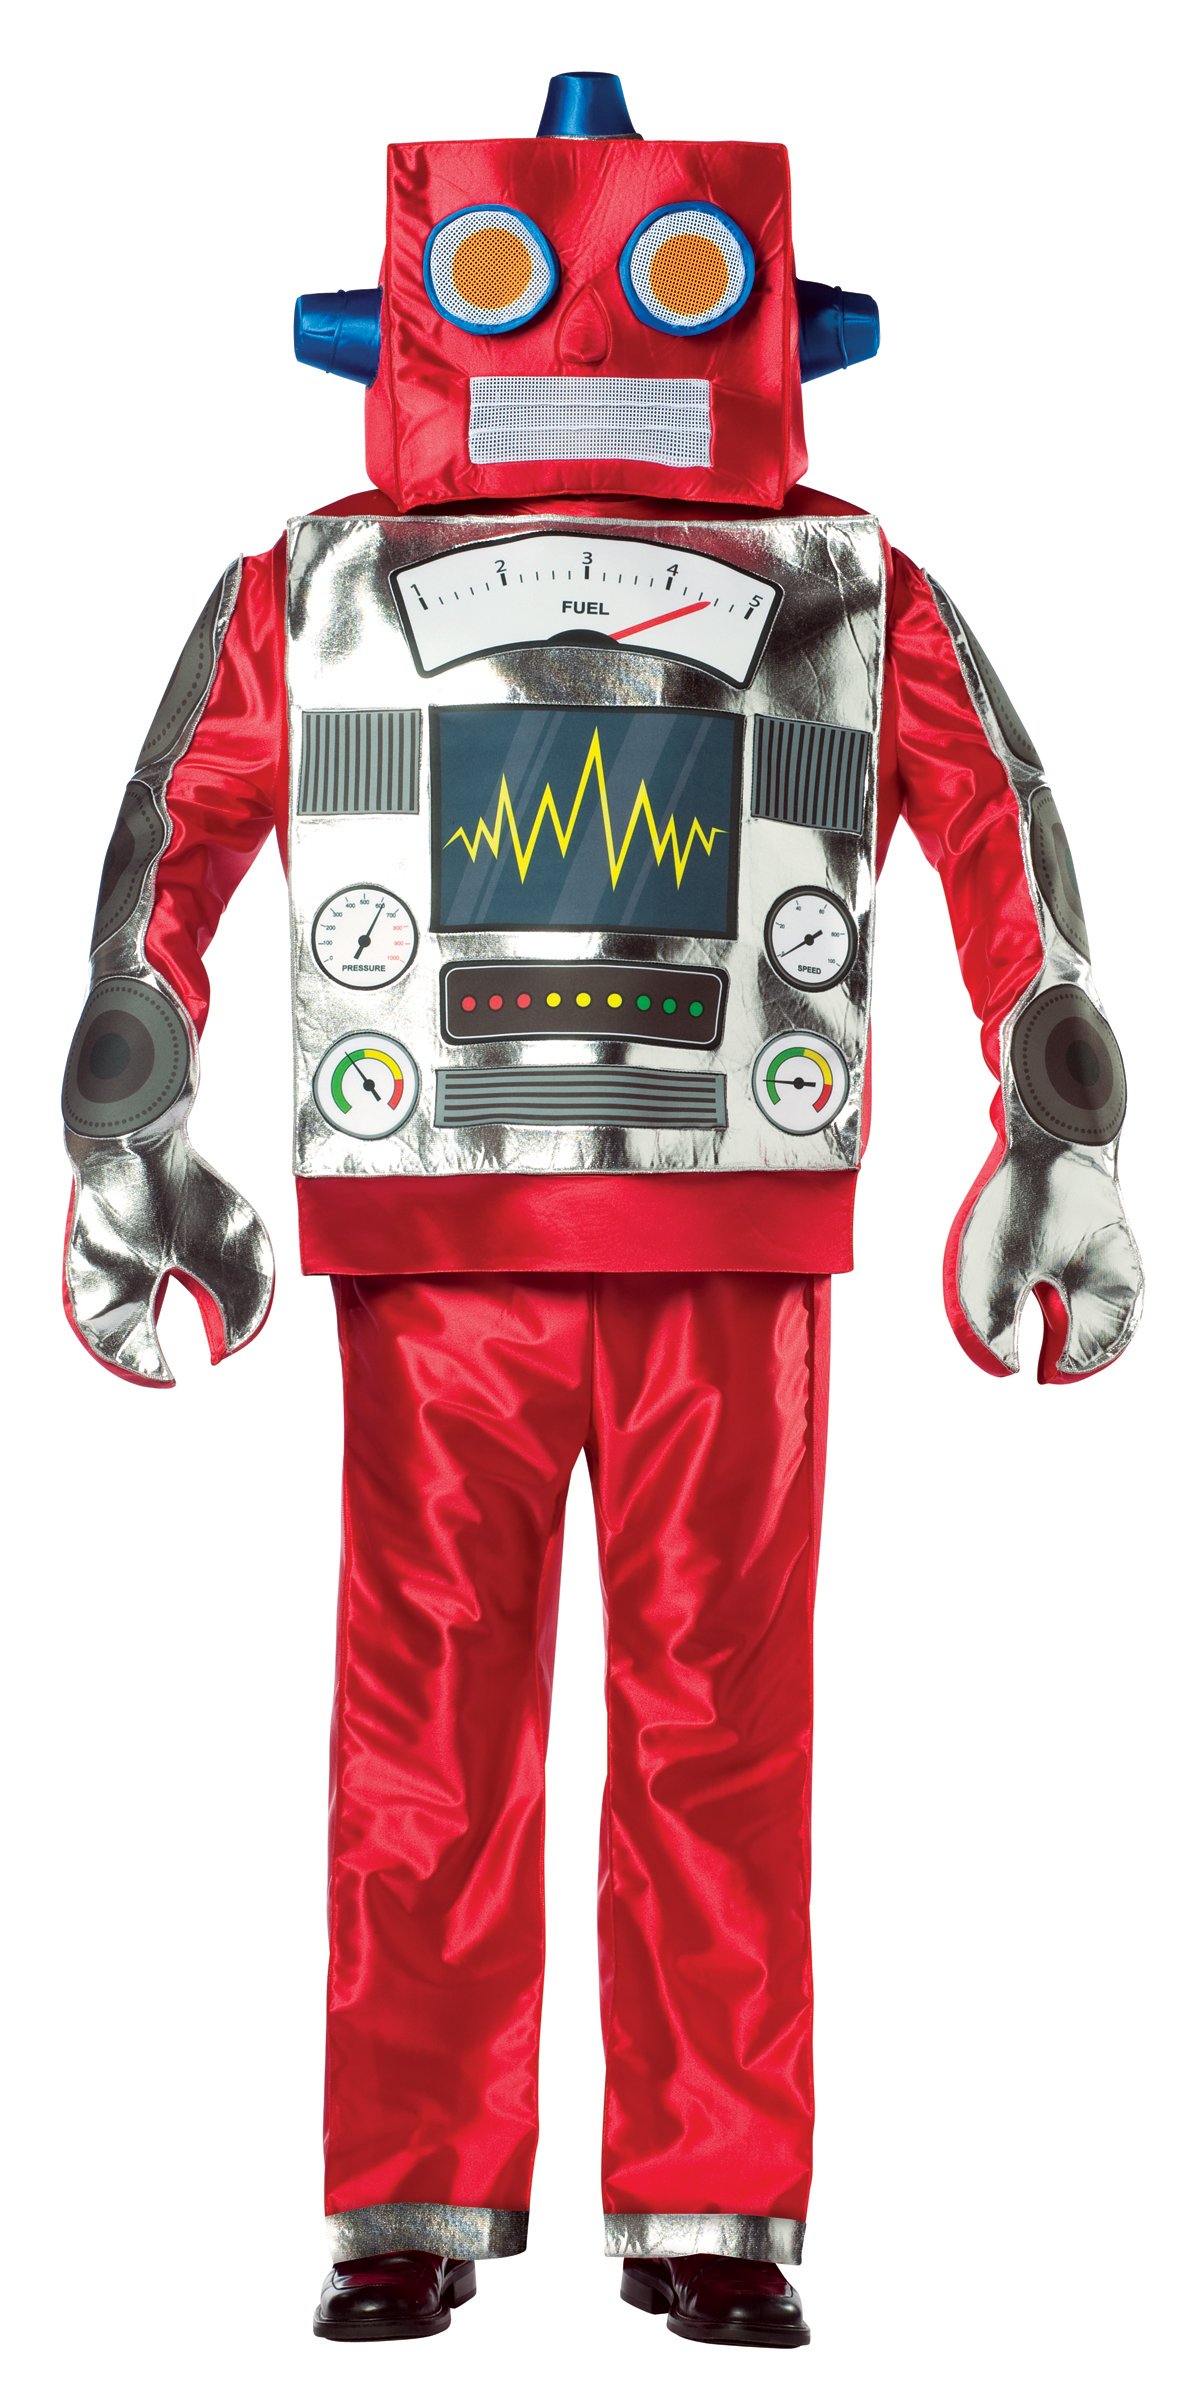 Retro Robot Adult Costume